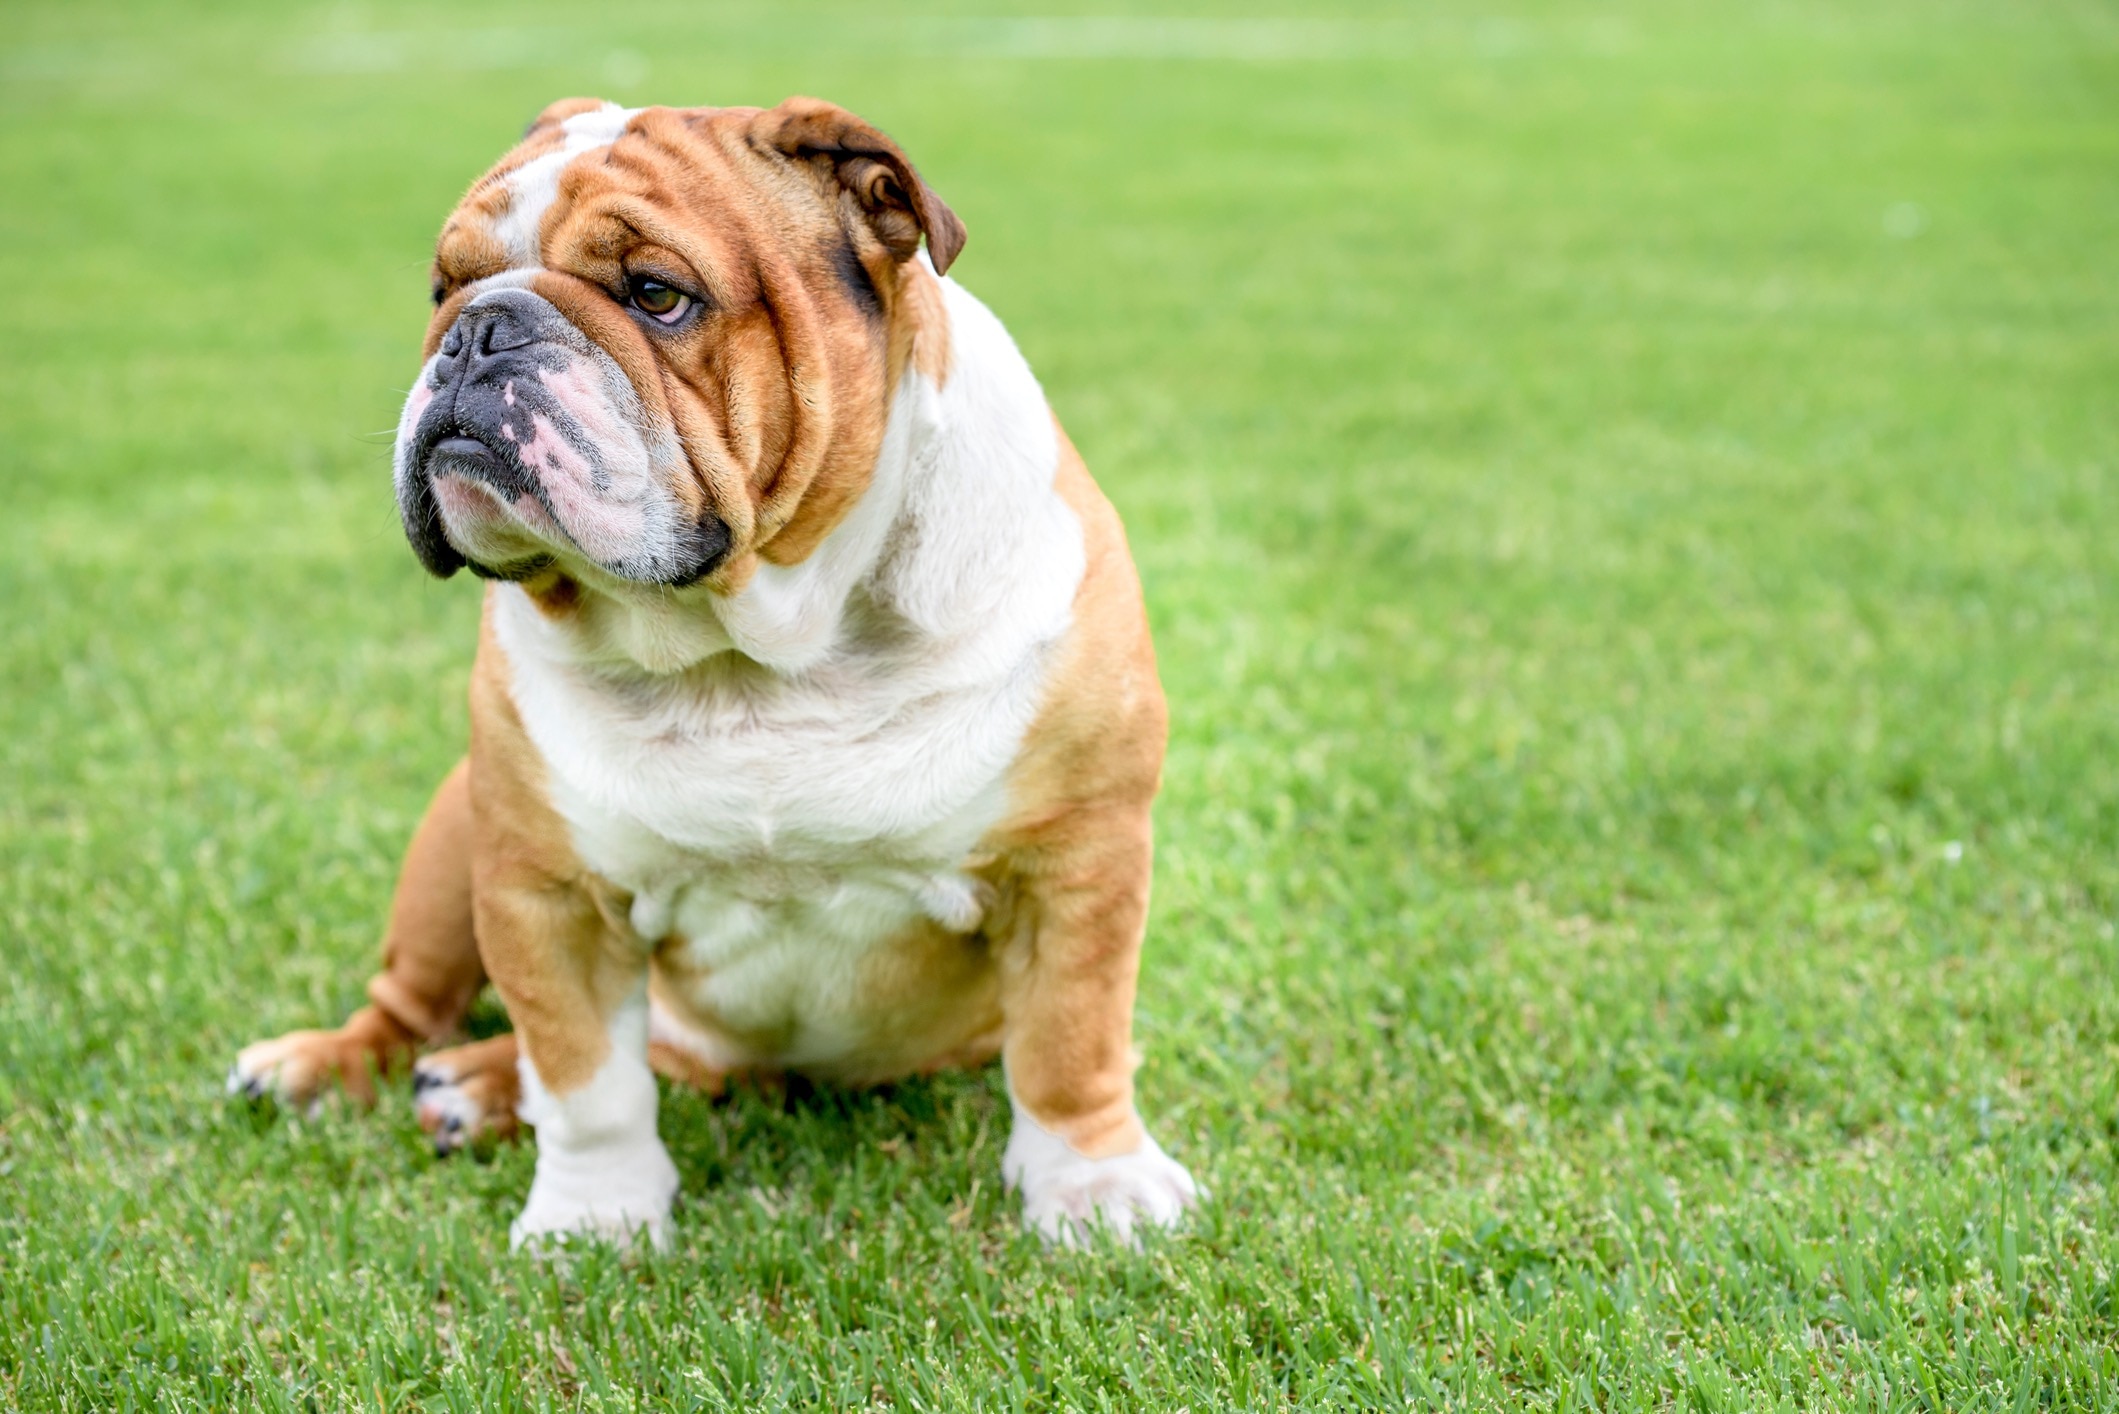 brown and white english bulldog sitting in grass looking grumpy